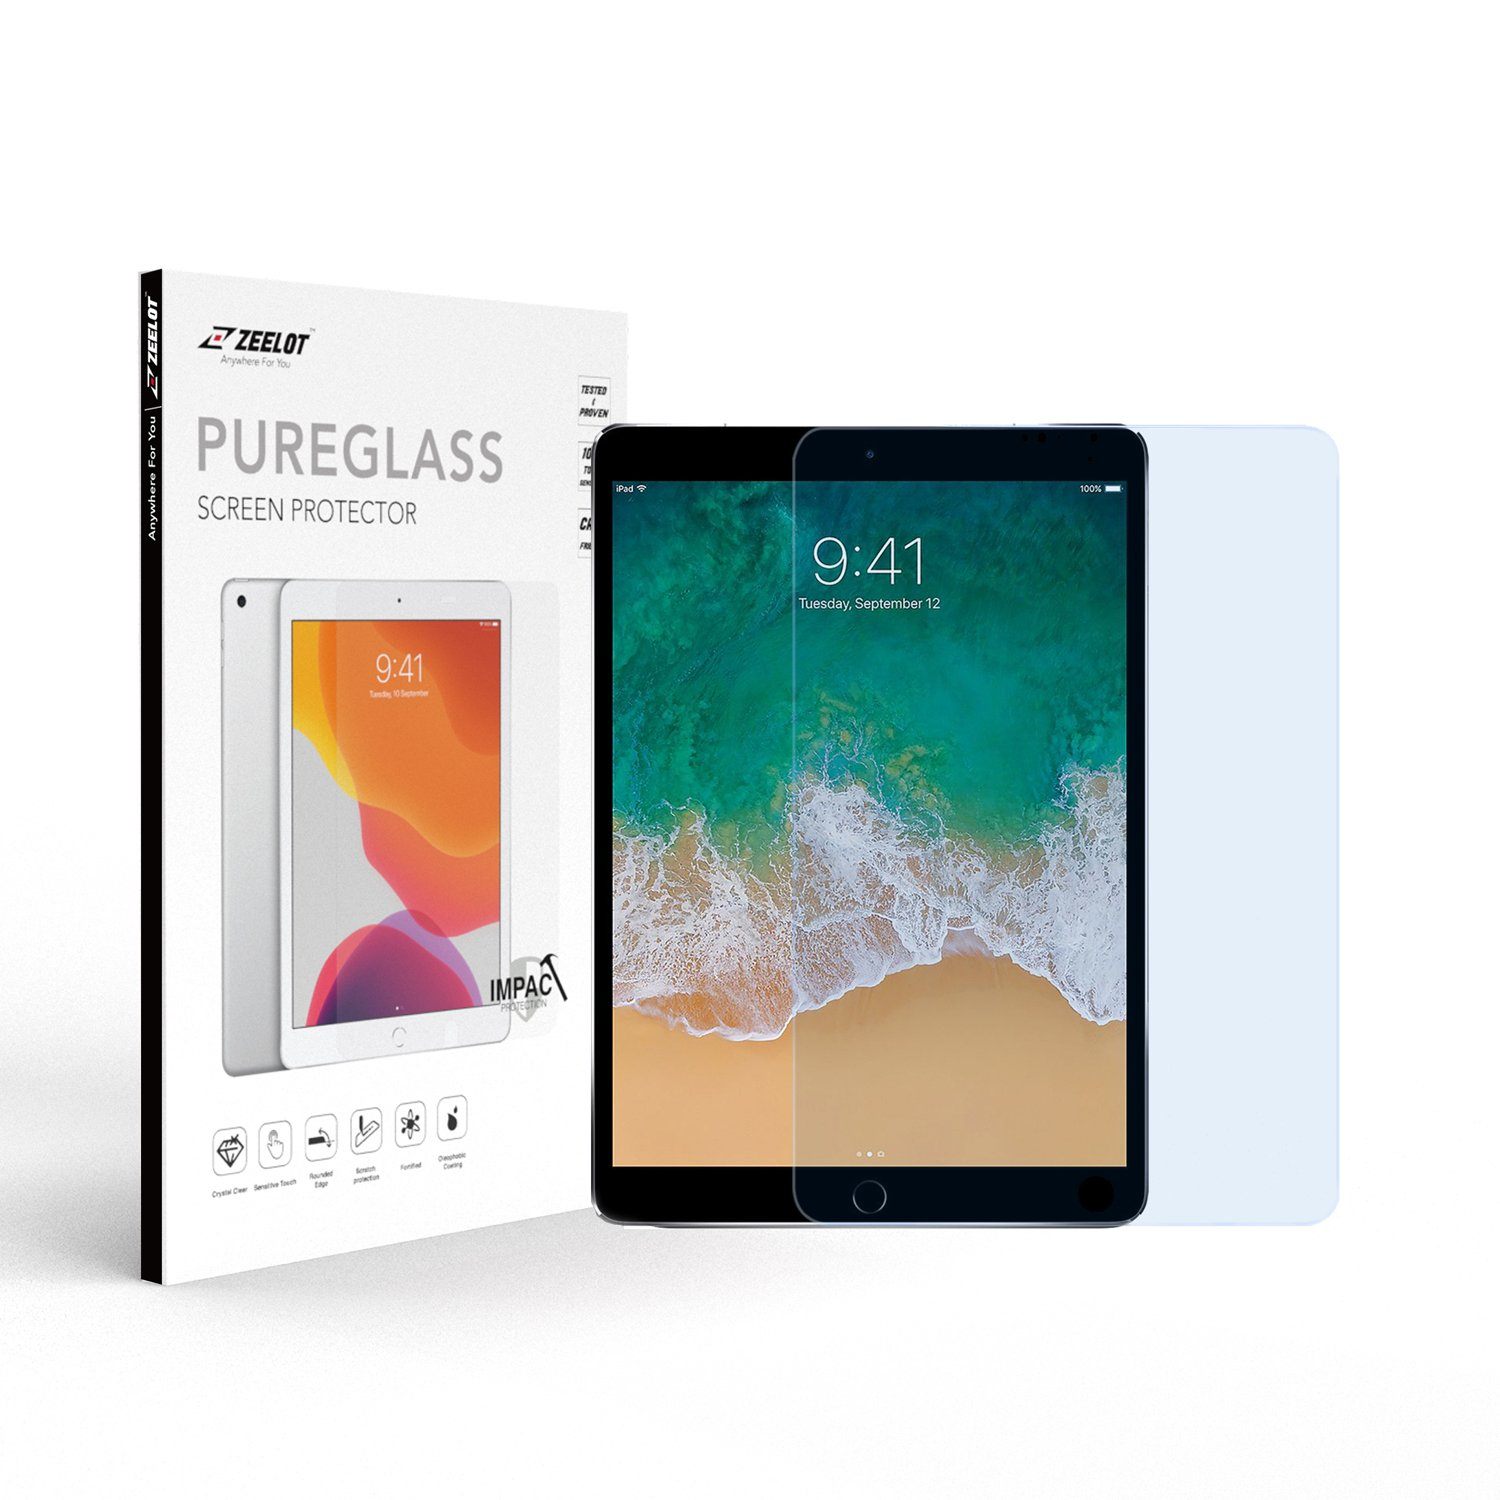 ZEELOT PureGlass 2.5D Tempered Glass Screen Protector for iPad Air/Pro 10.5" (2019/2017), Anti Blue Ray Default ZEELOT 